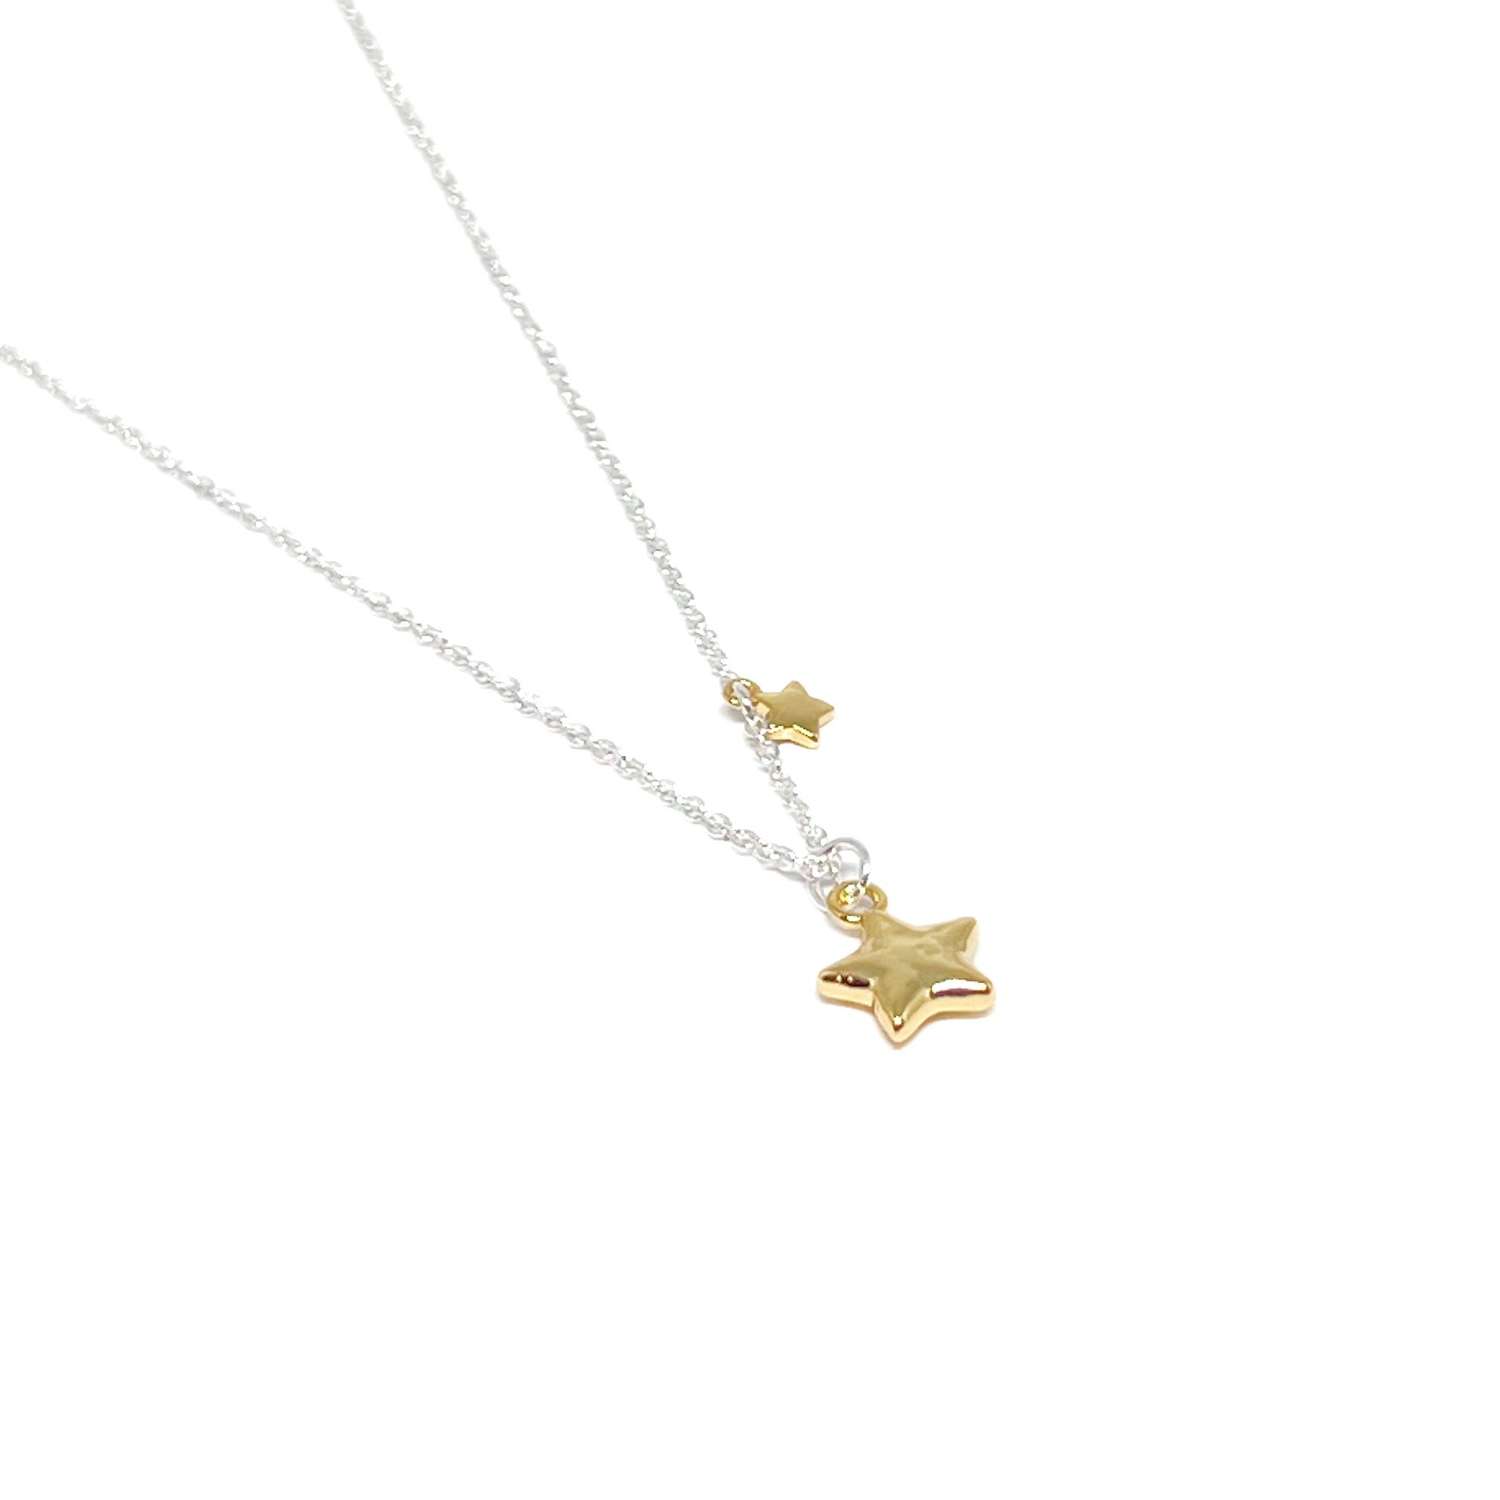 Rio Star Necklace - Gold